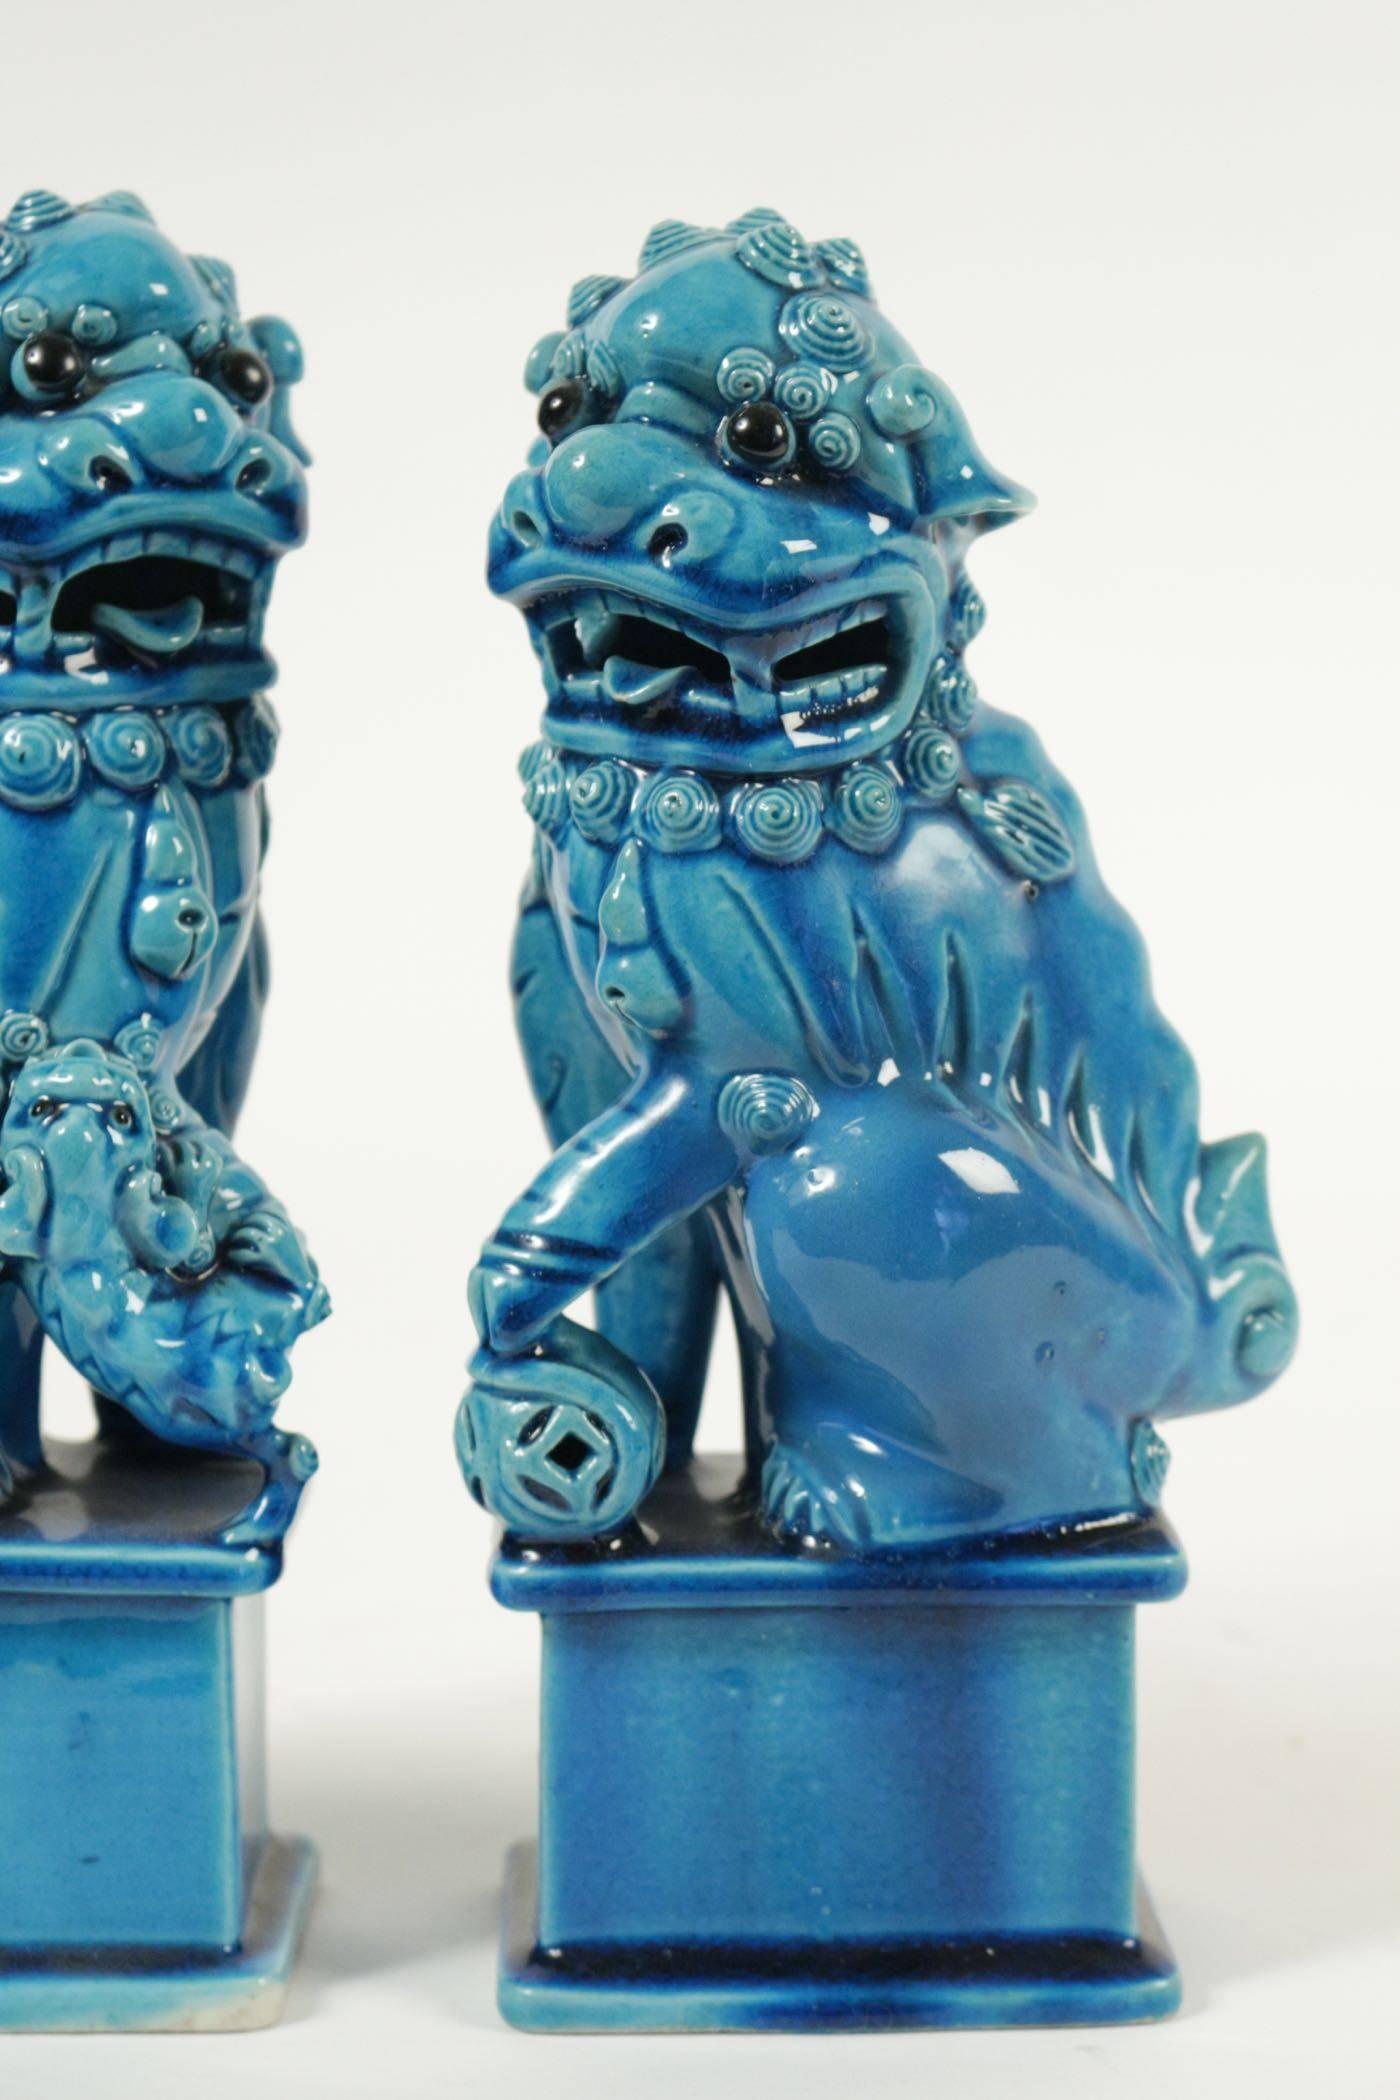 Paire of Turquoise Porcelain and enamel Pho Dogs C.1900. 
h: 26cm, l: 13cm, p: 10cm